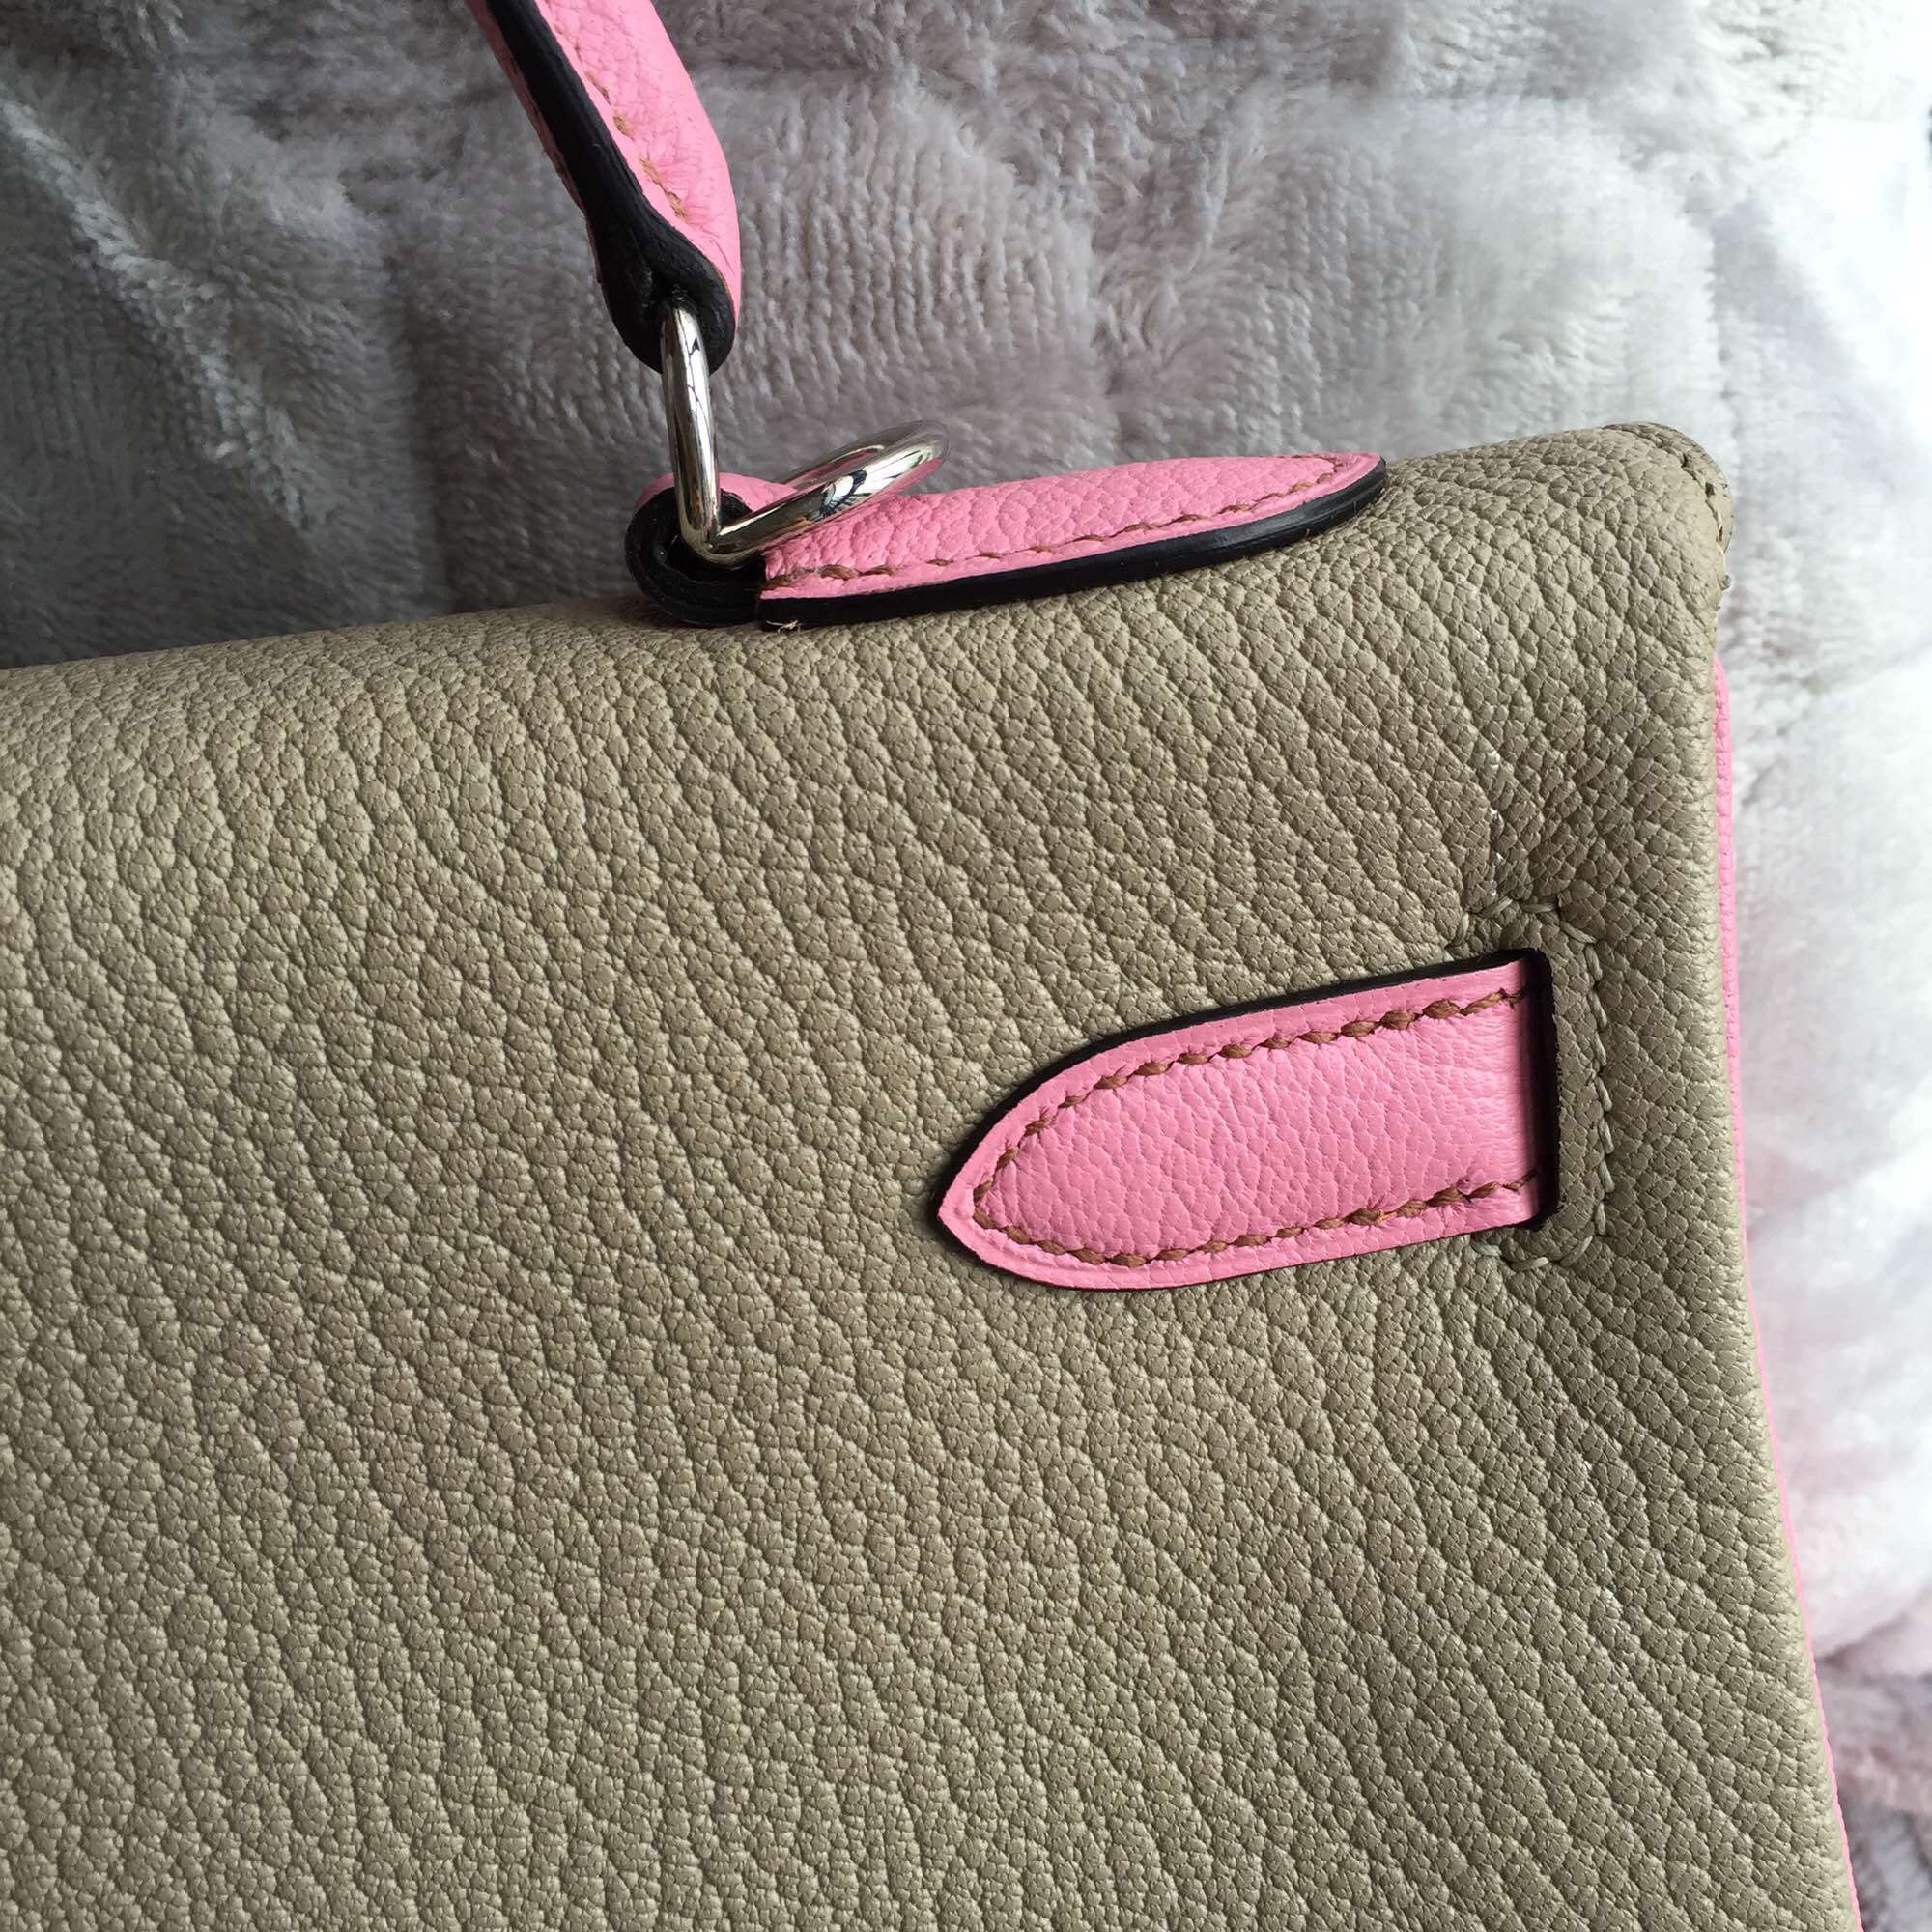 32CM Hermes Kelly Bag Retourne C9 Lime Yellow/5P Pink/1F Light Grey Chevre Leather